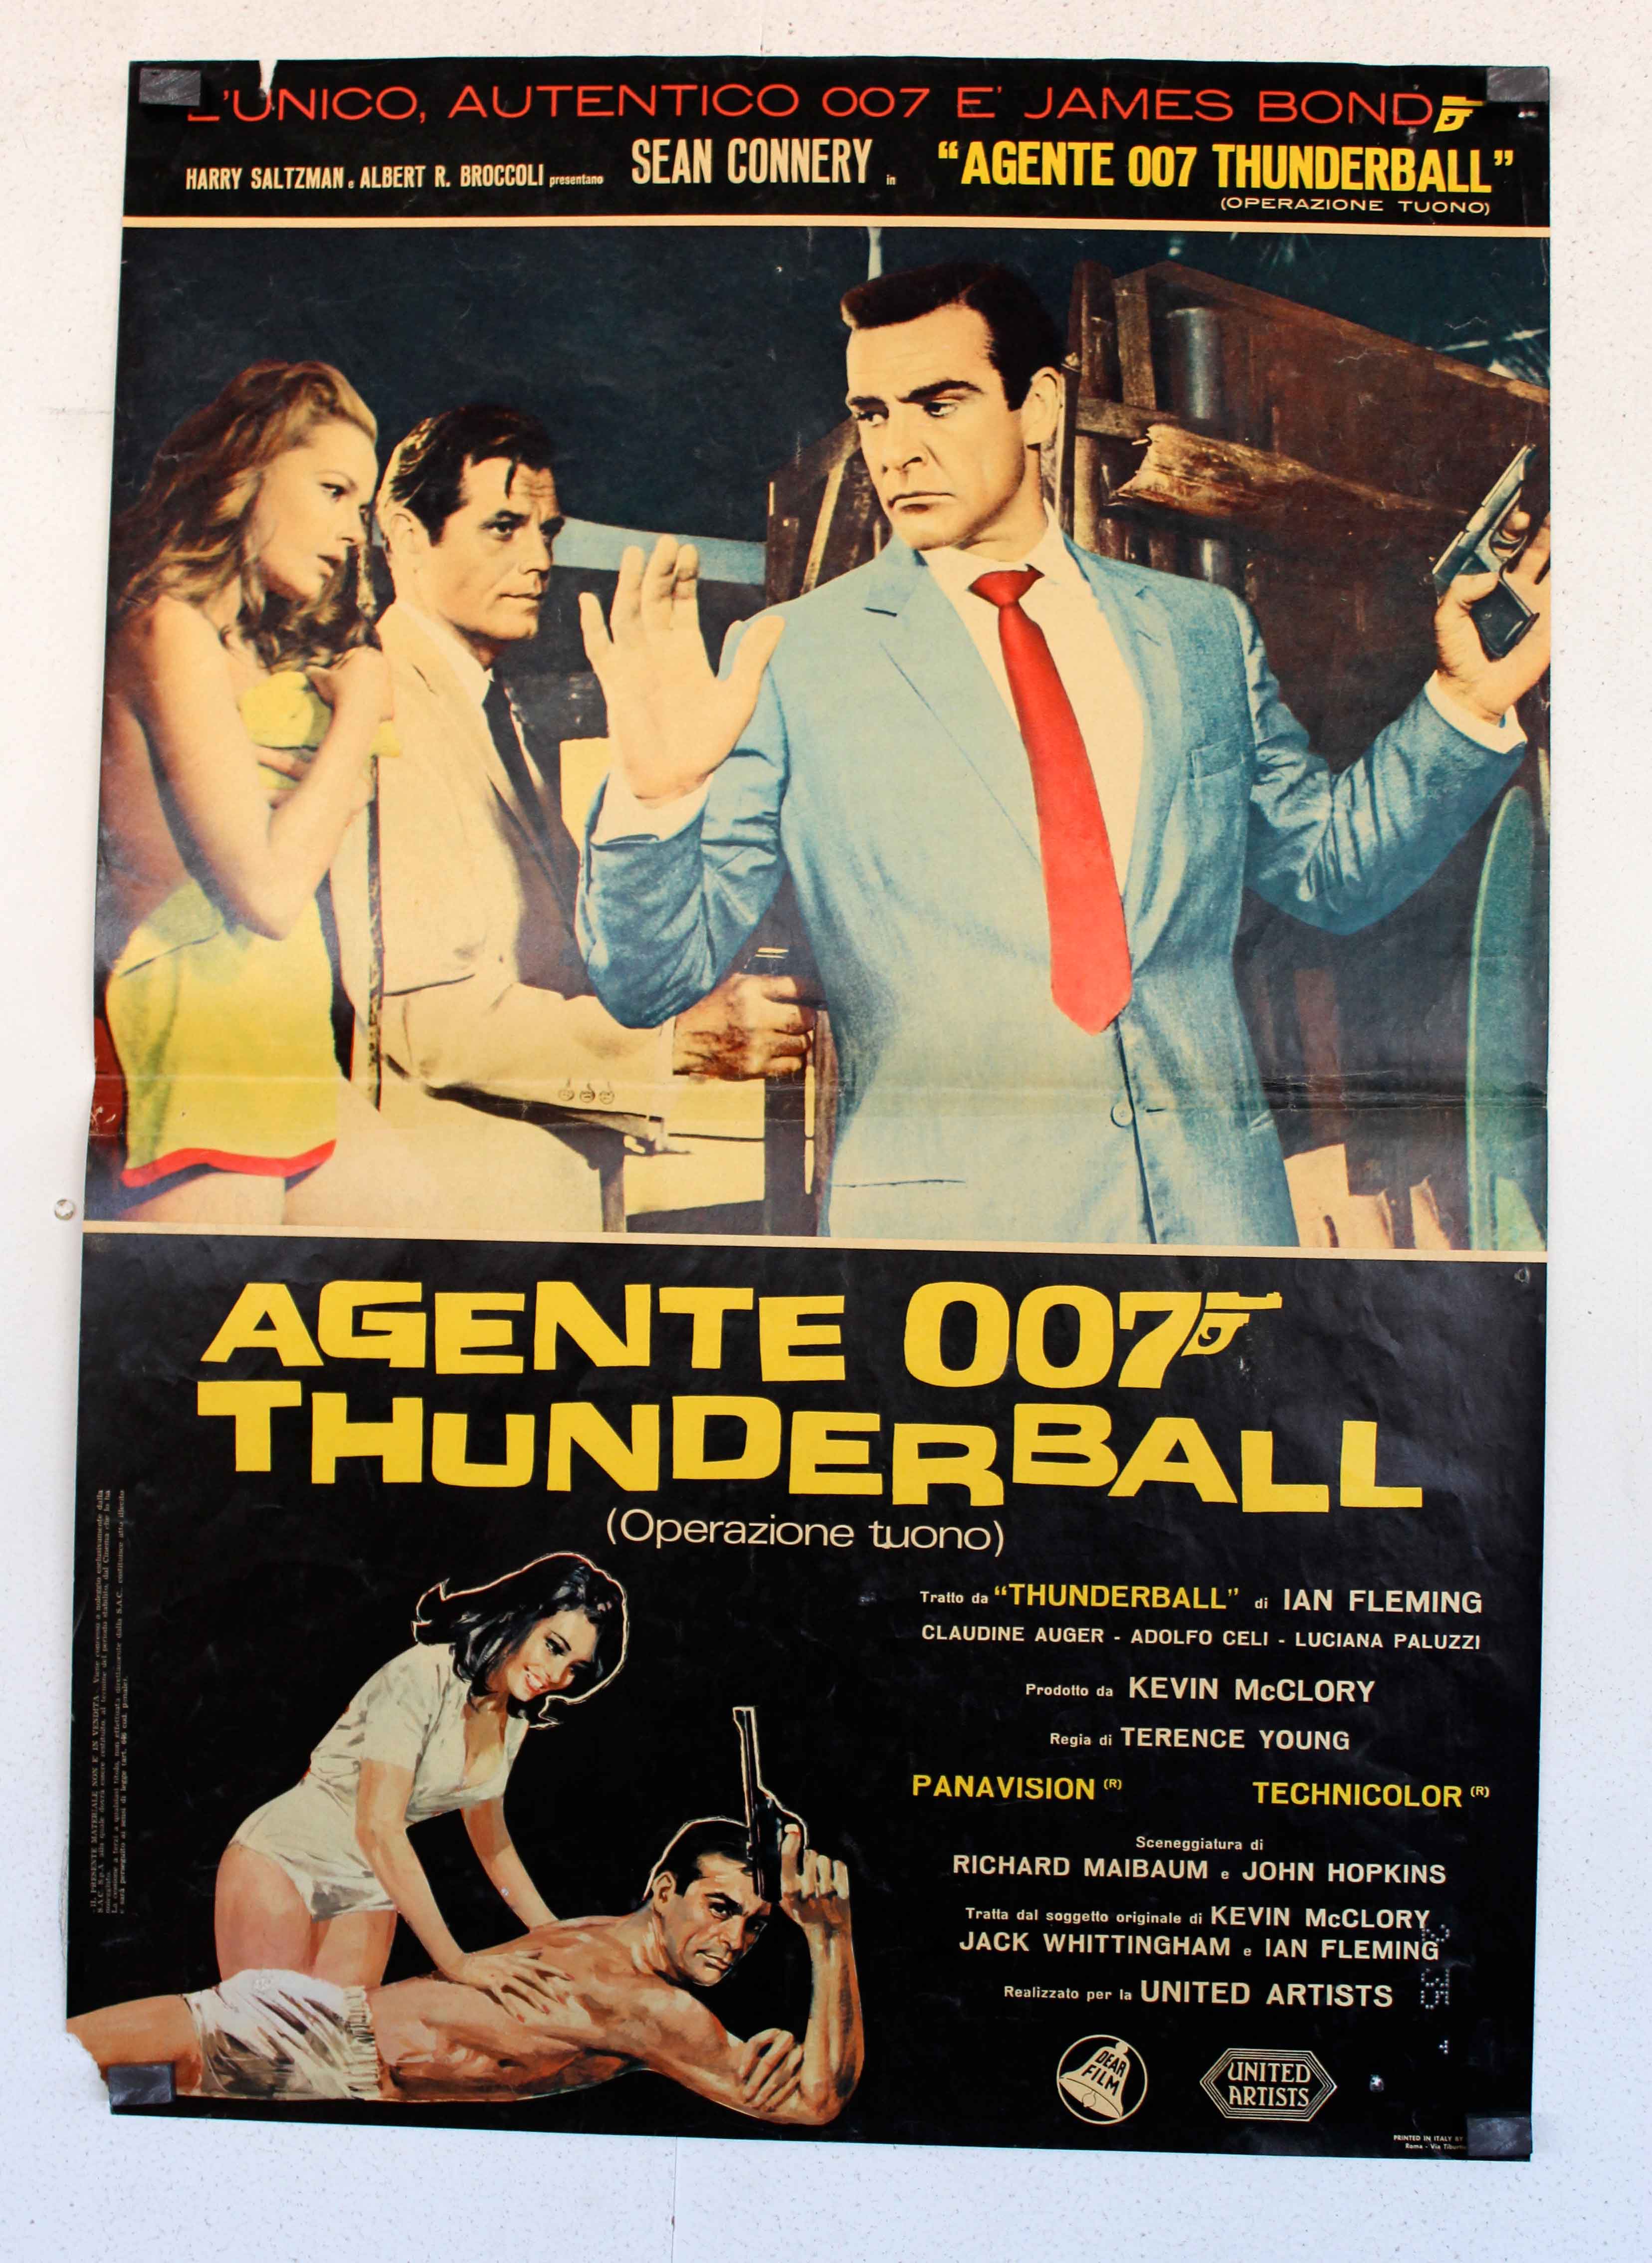 AGENTE 007 THUNDERBALL